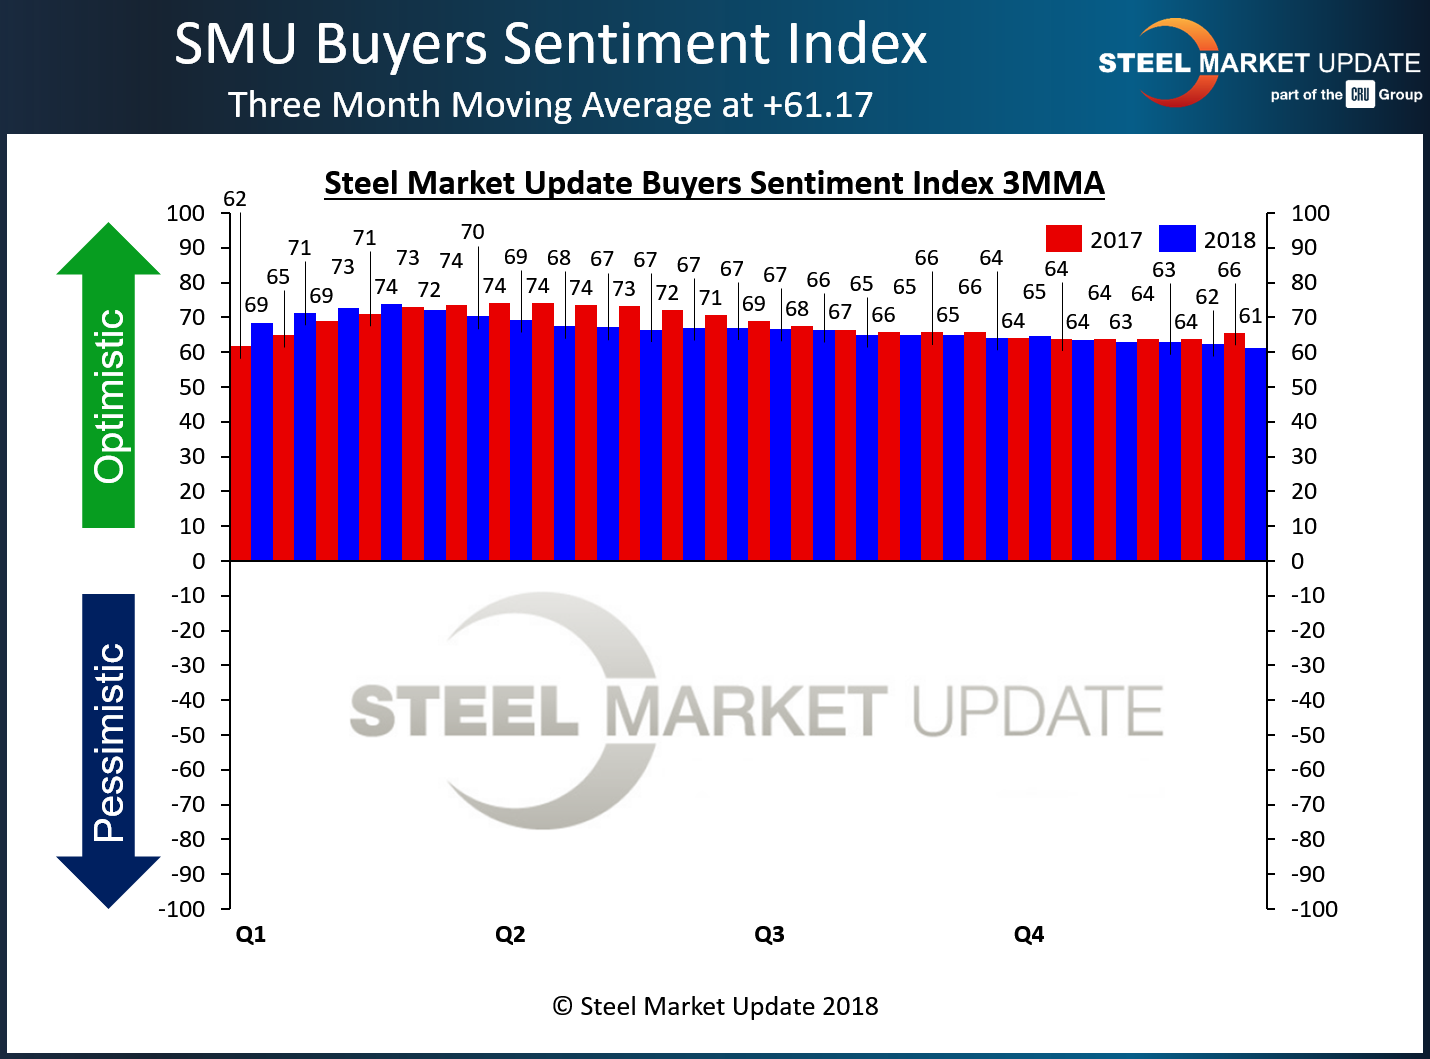 SMU Steel Buyers Sentiment Index